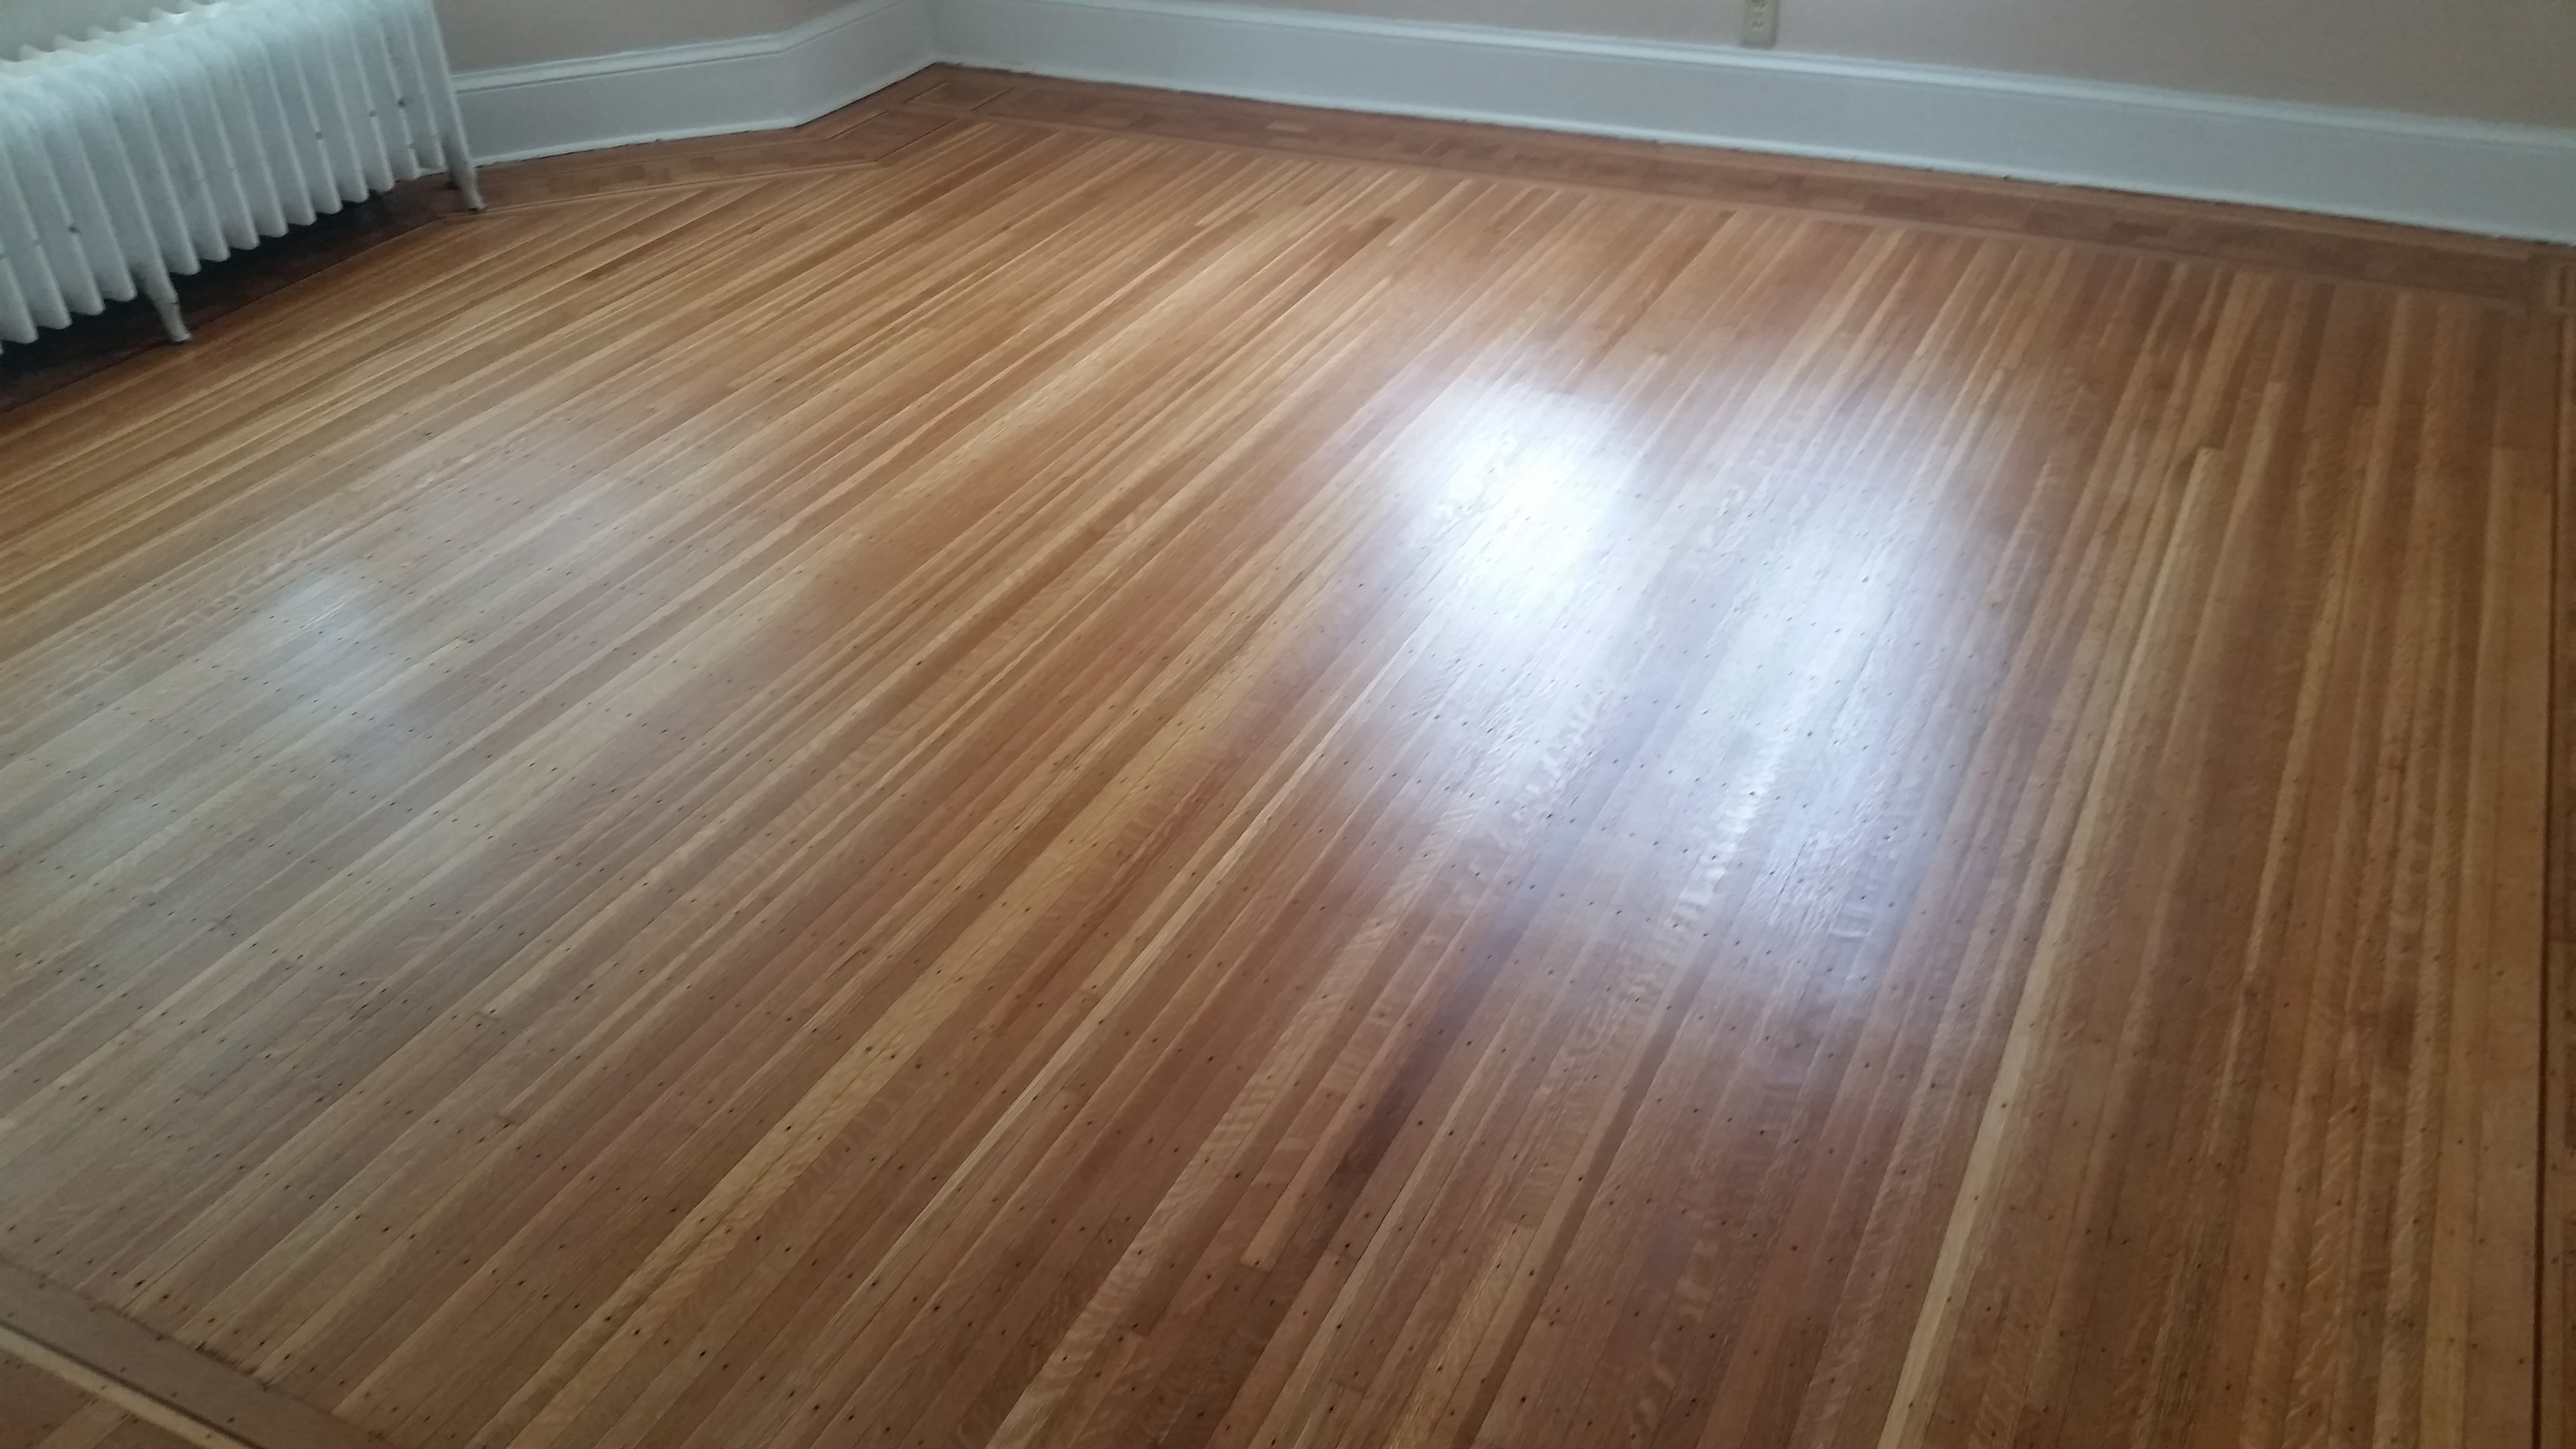 Professional Hardwood Floor Cleaning Companies Of Rochester Hardwood Floors Of Utica Home In 20150608 091029